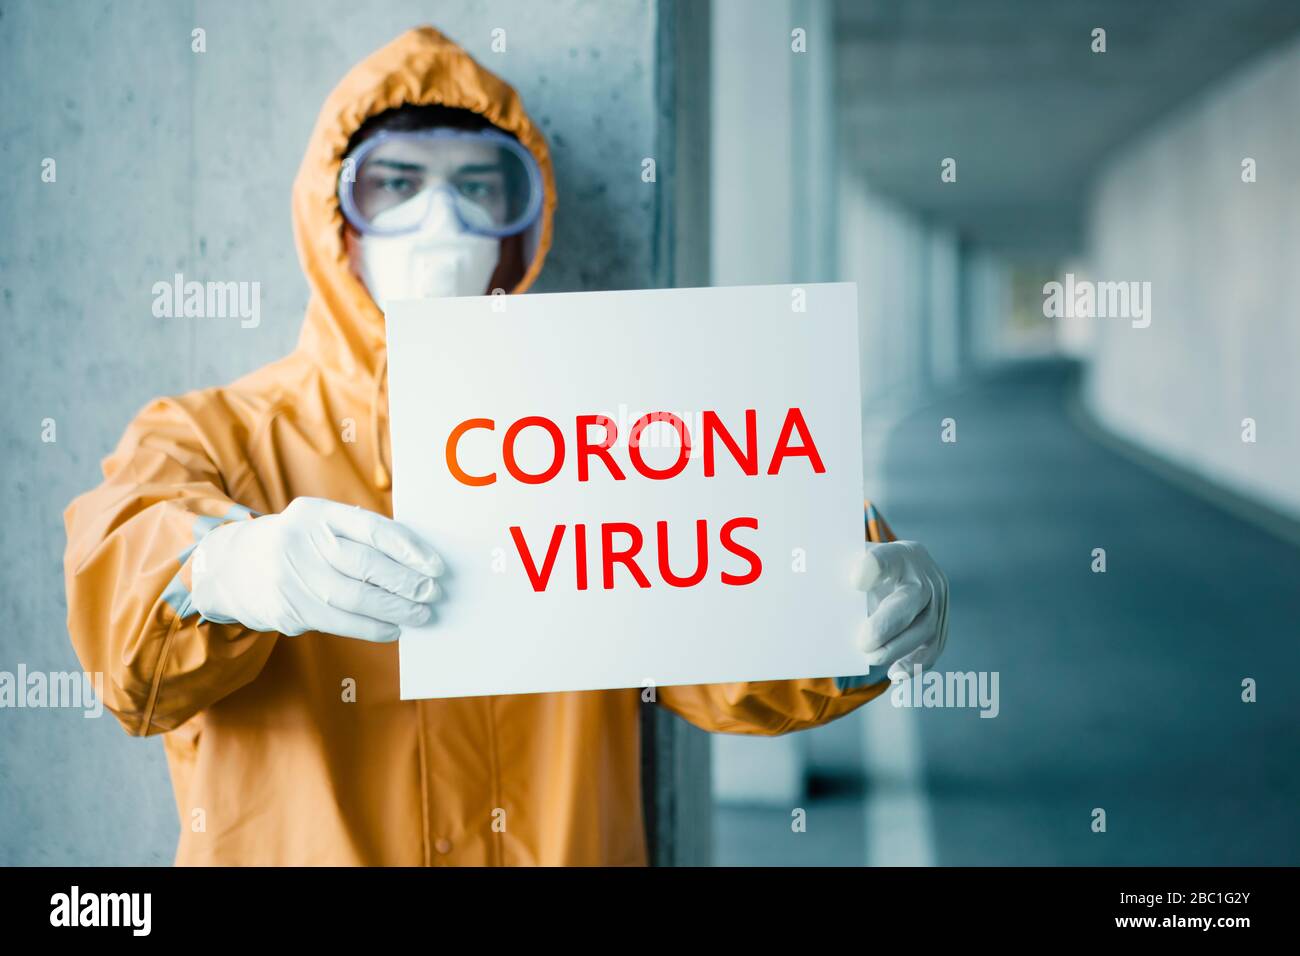 Portrait of man wearing protective clothing holding 'Corona virus' sign Stock Photo